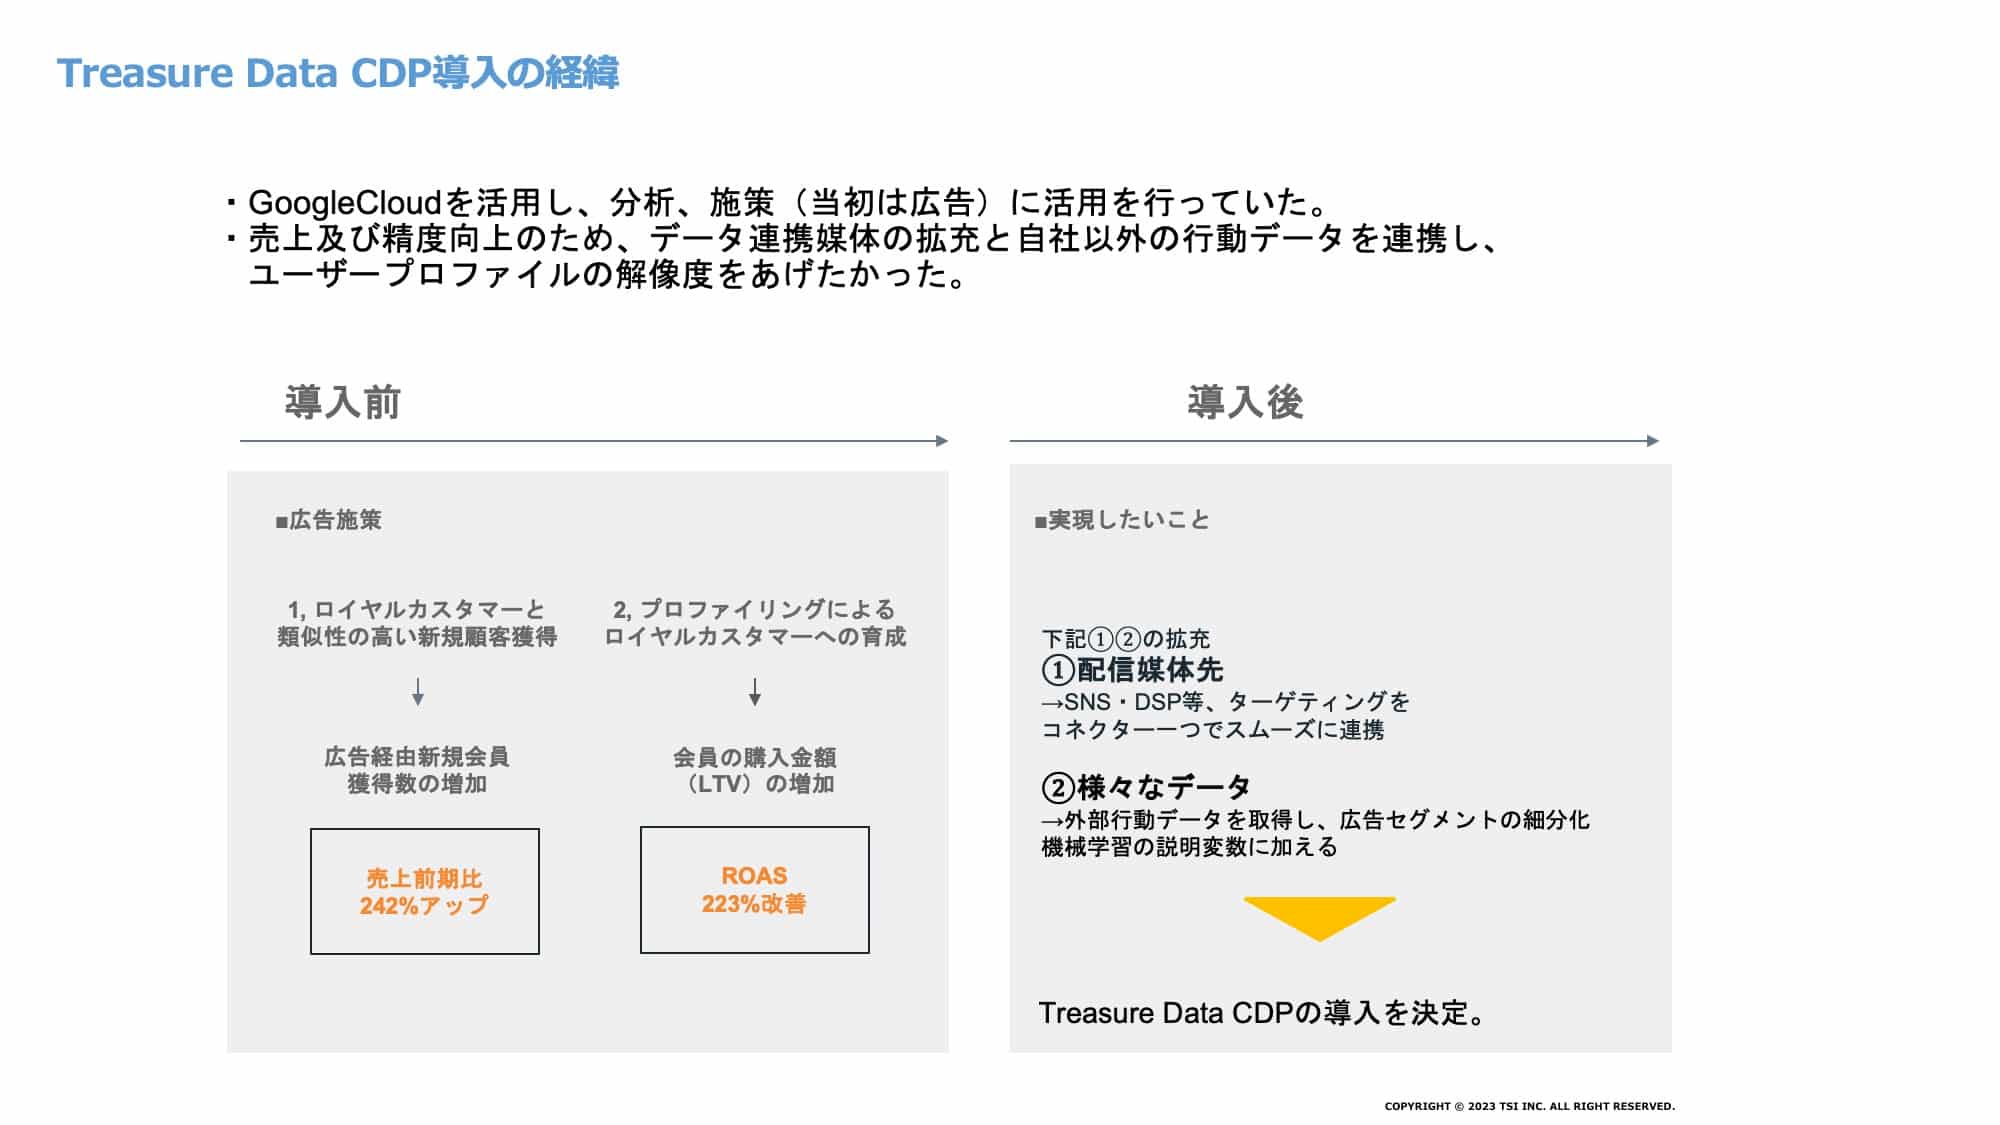 Treasure Data CDP導入の経緯